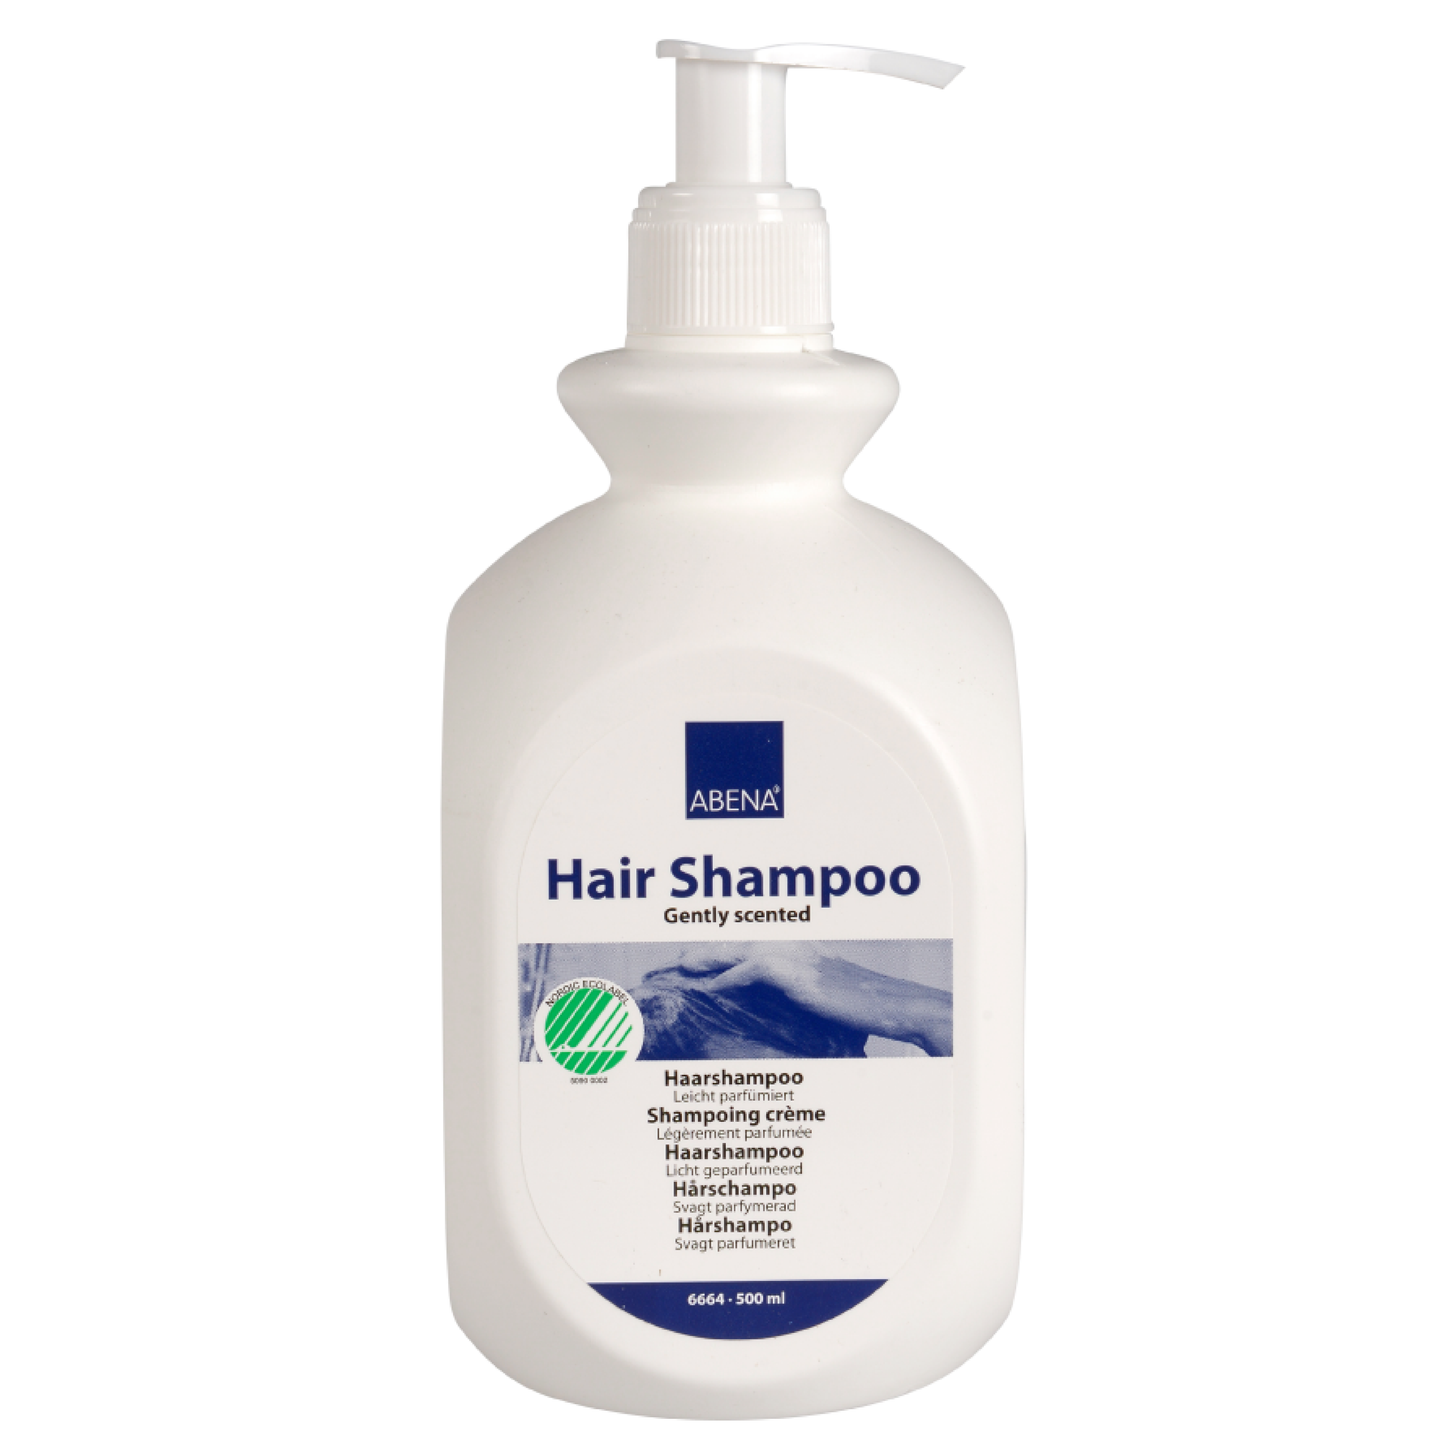 Hair Shampoo Bottle